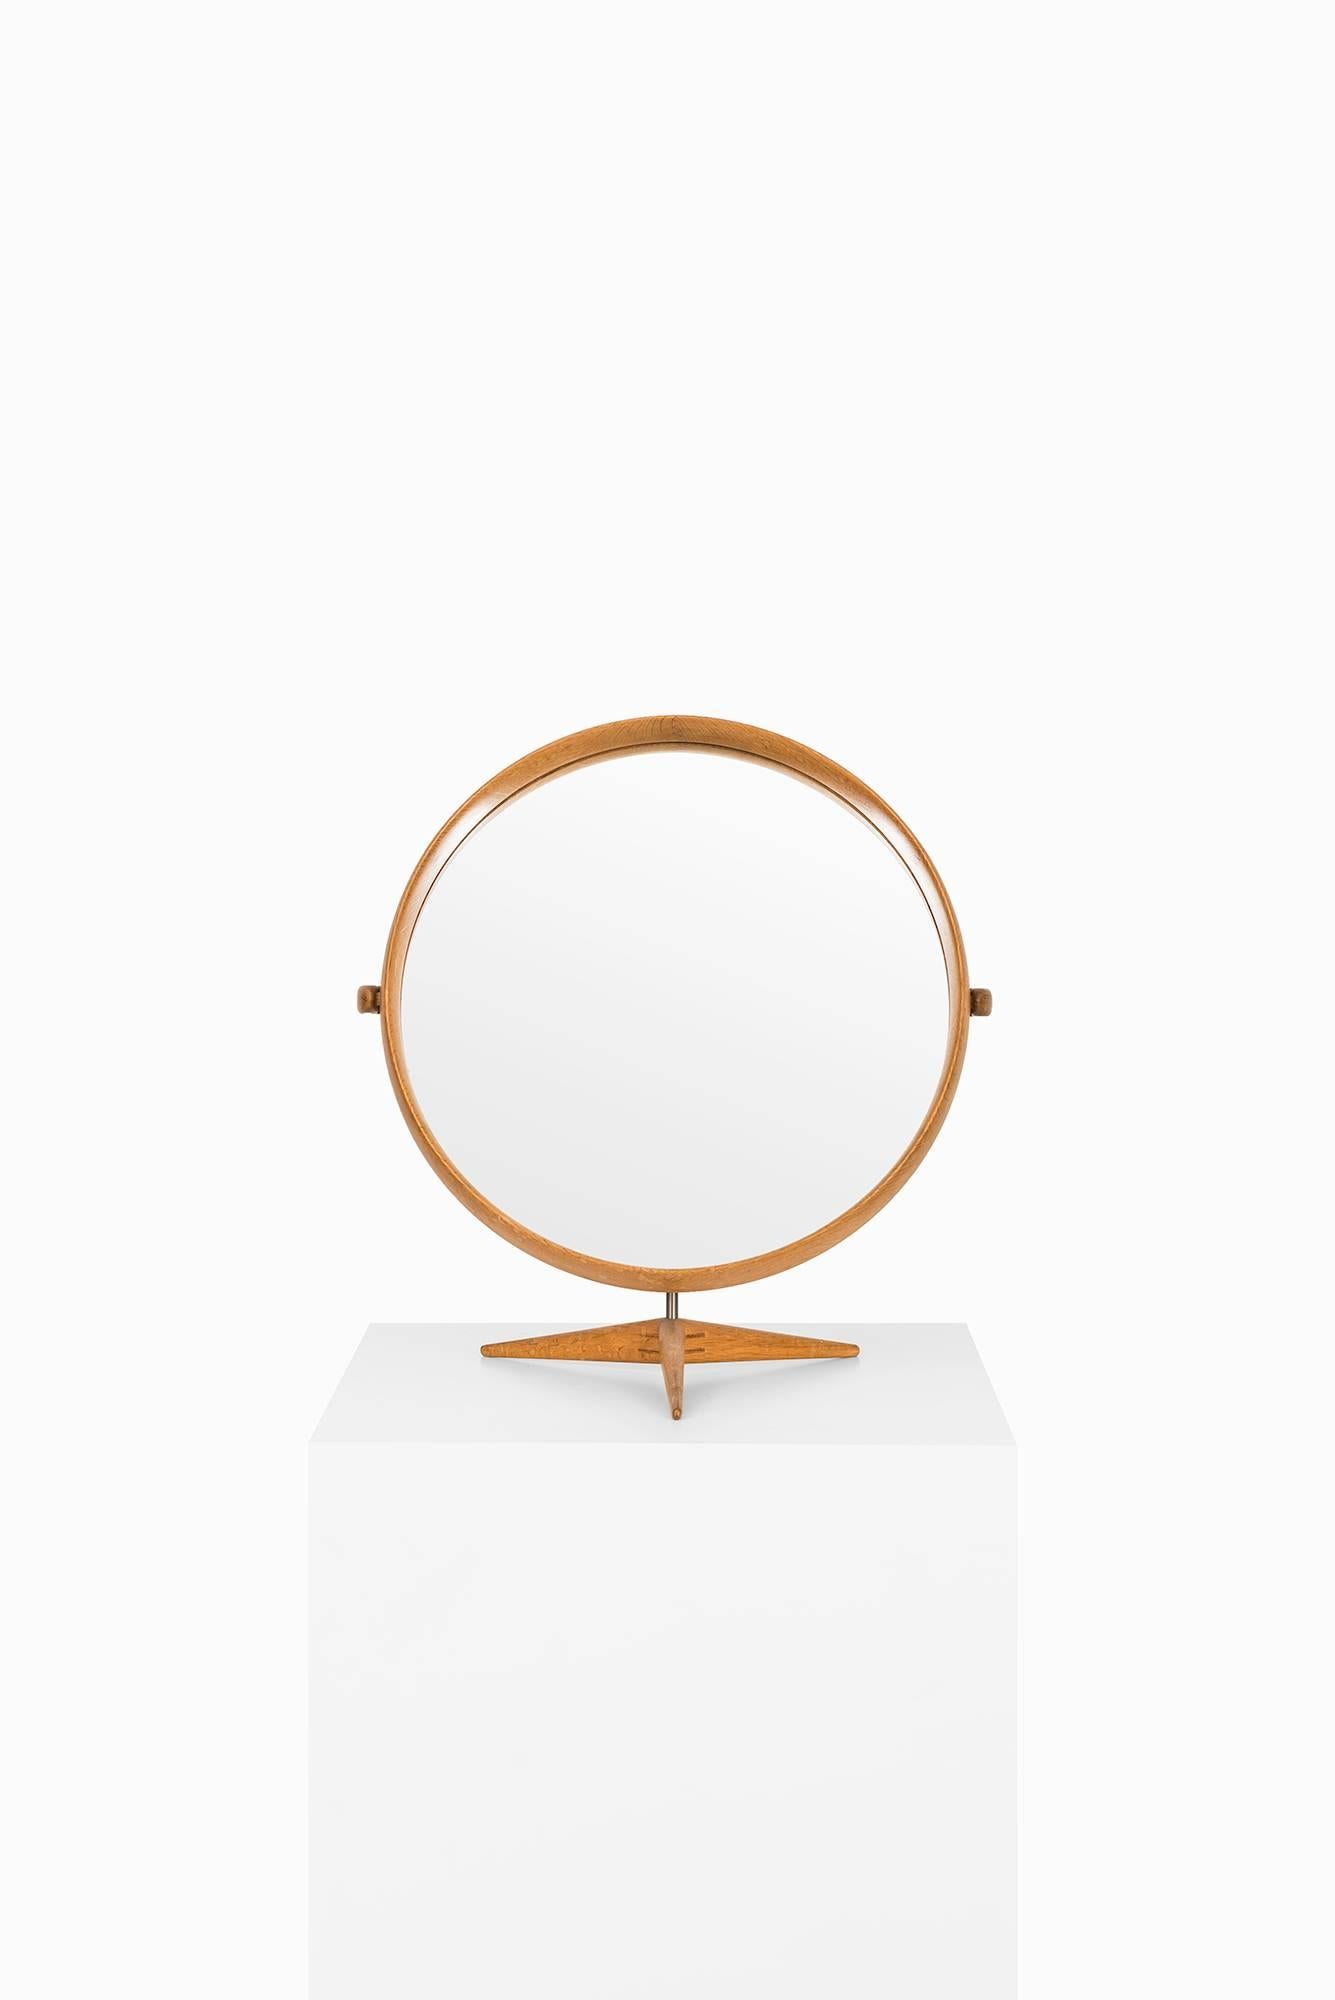 Scandinavian Modern Uno & Östen Kristiansson Table Mirror Produced by Luxus in Sweden For Sale